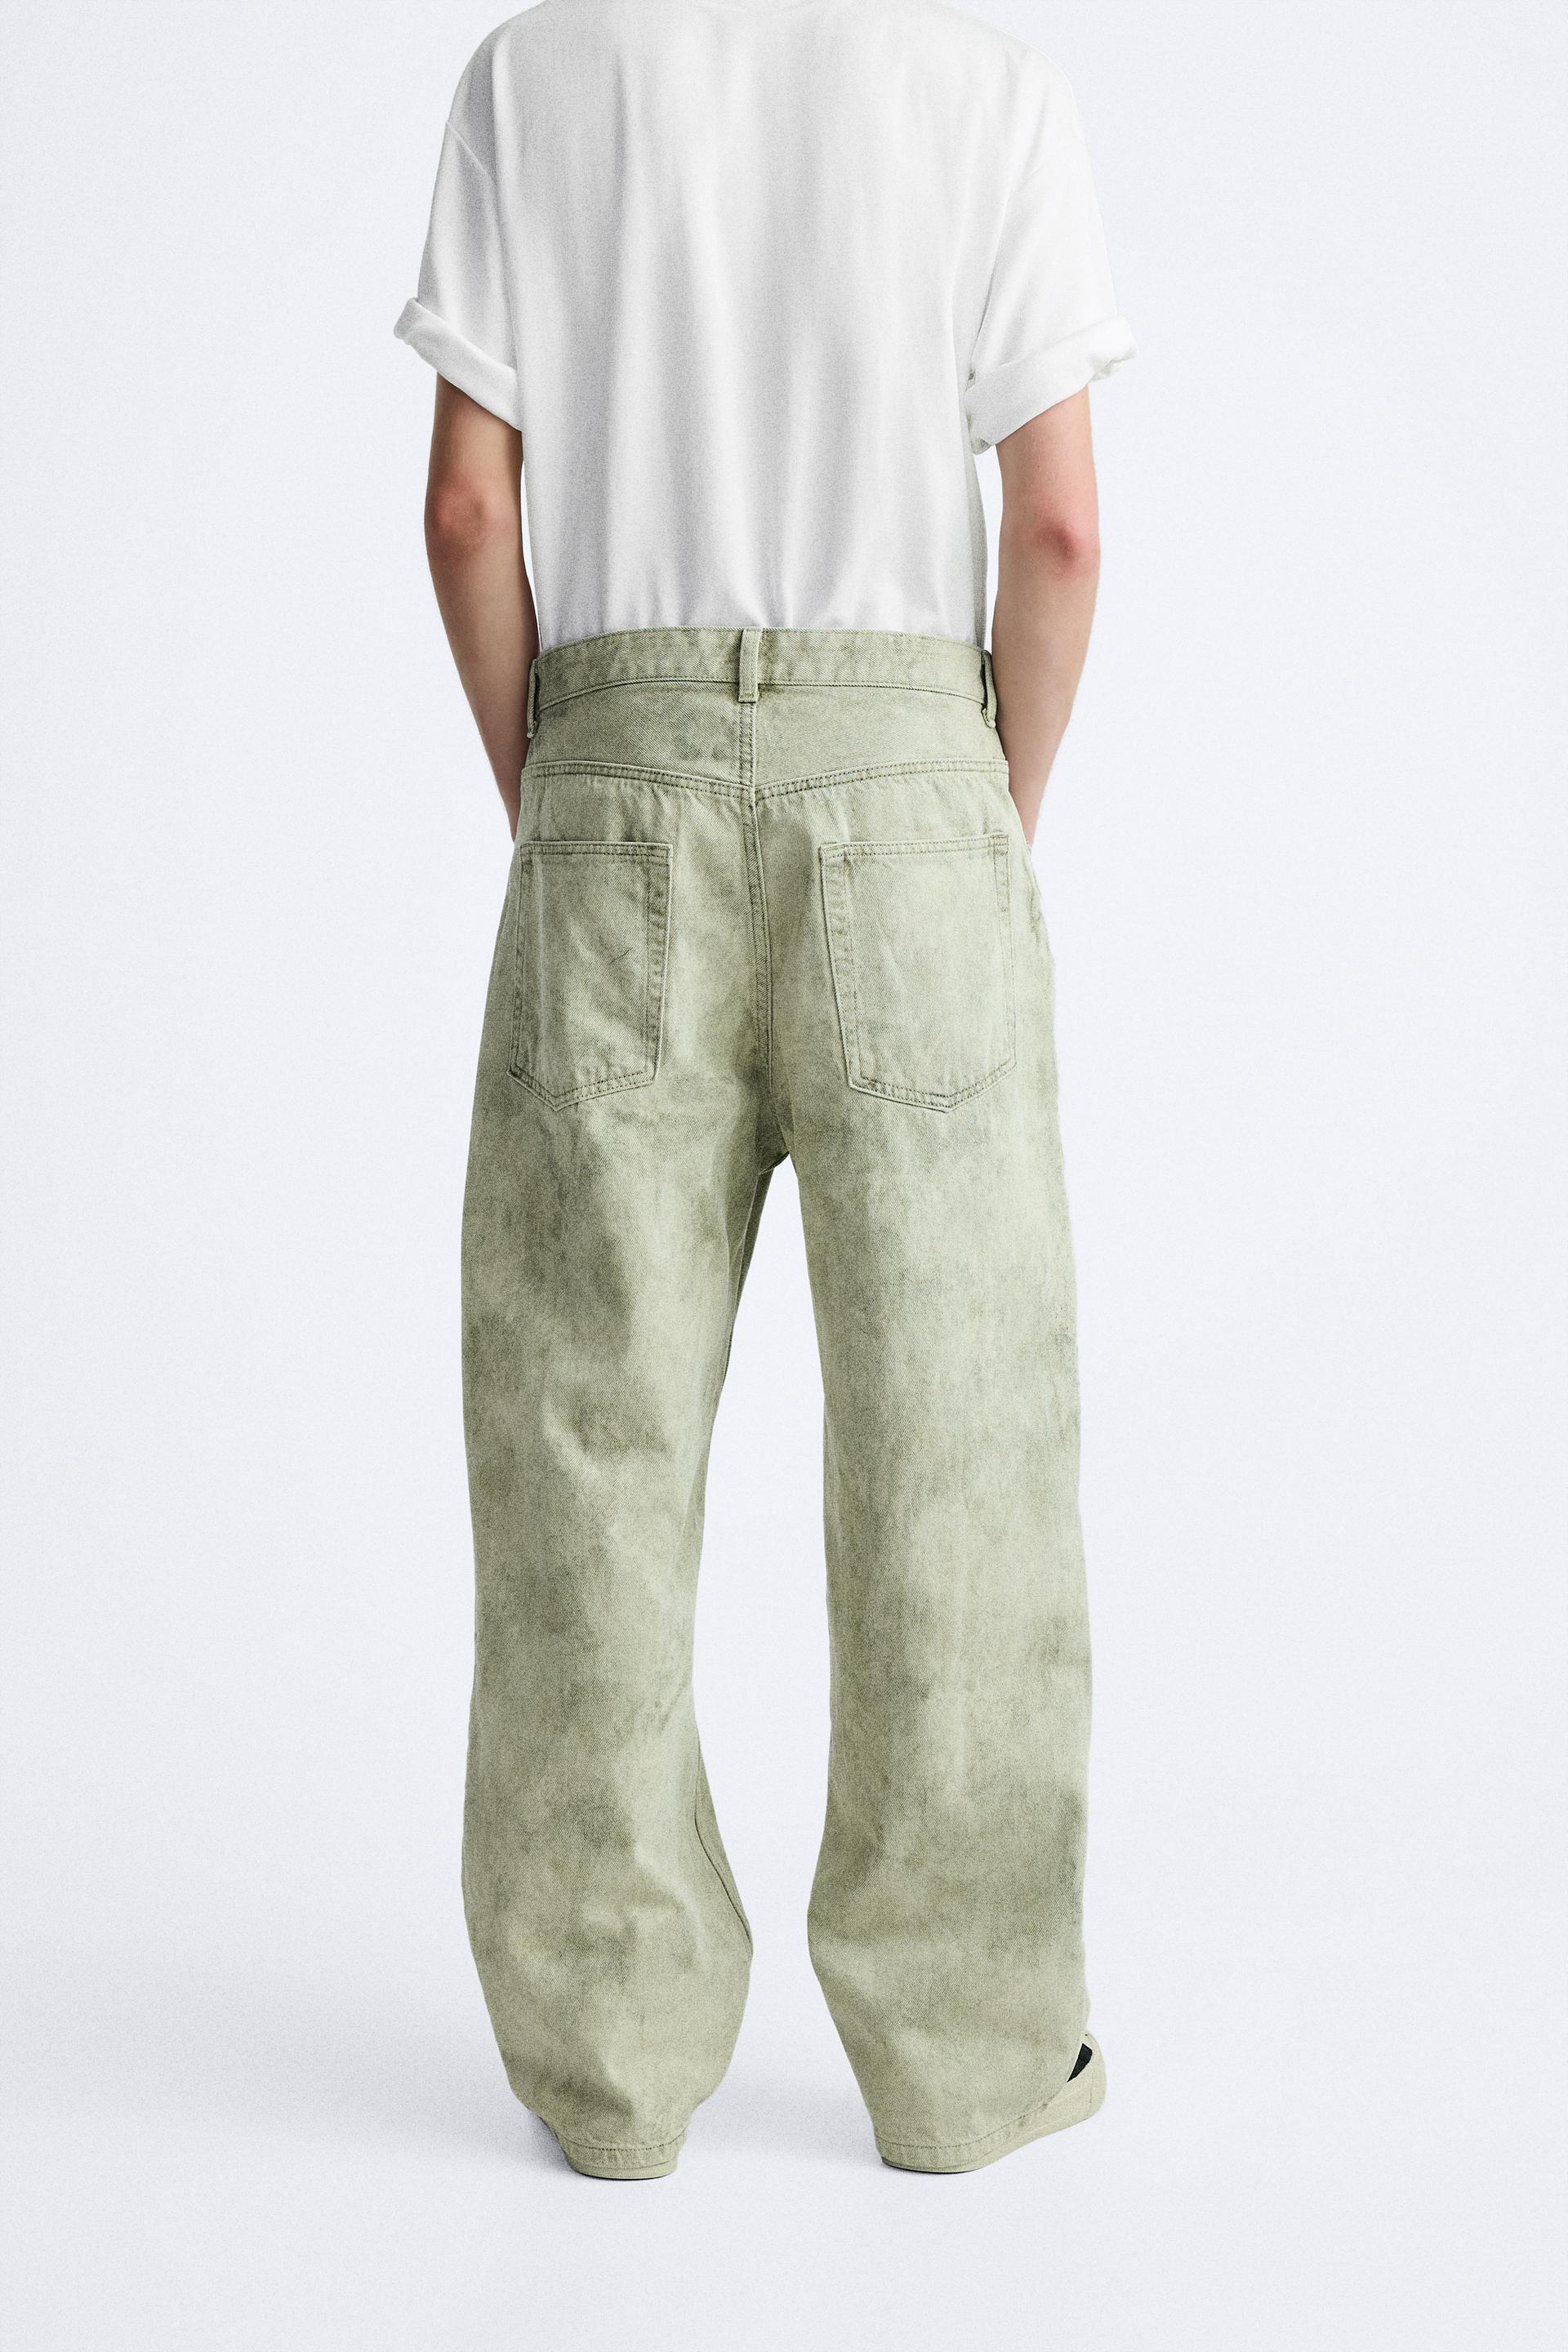 ZARA Snake Print Skinny Jeans Green Size 6 - $18 (48% Off Retail) - From Bri